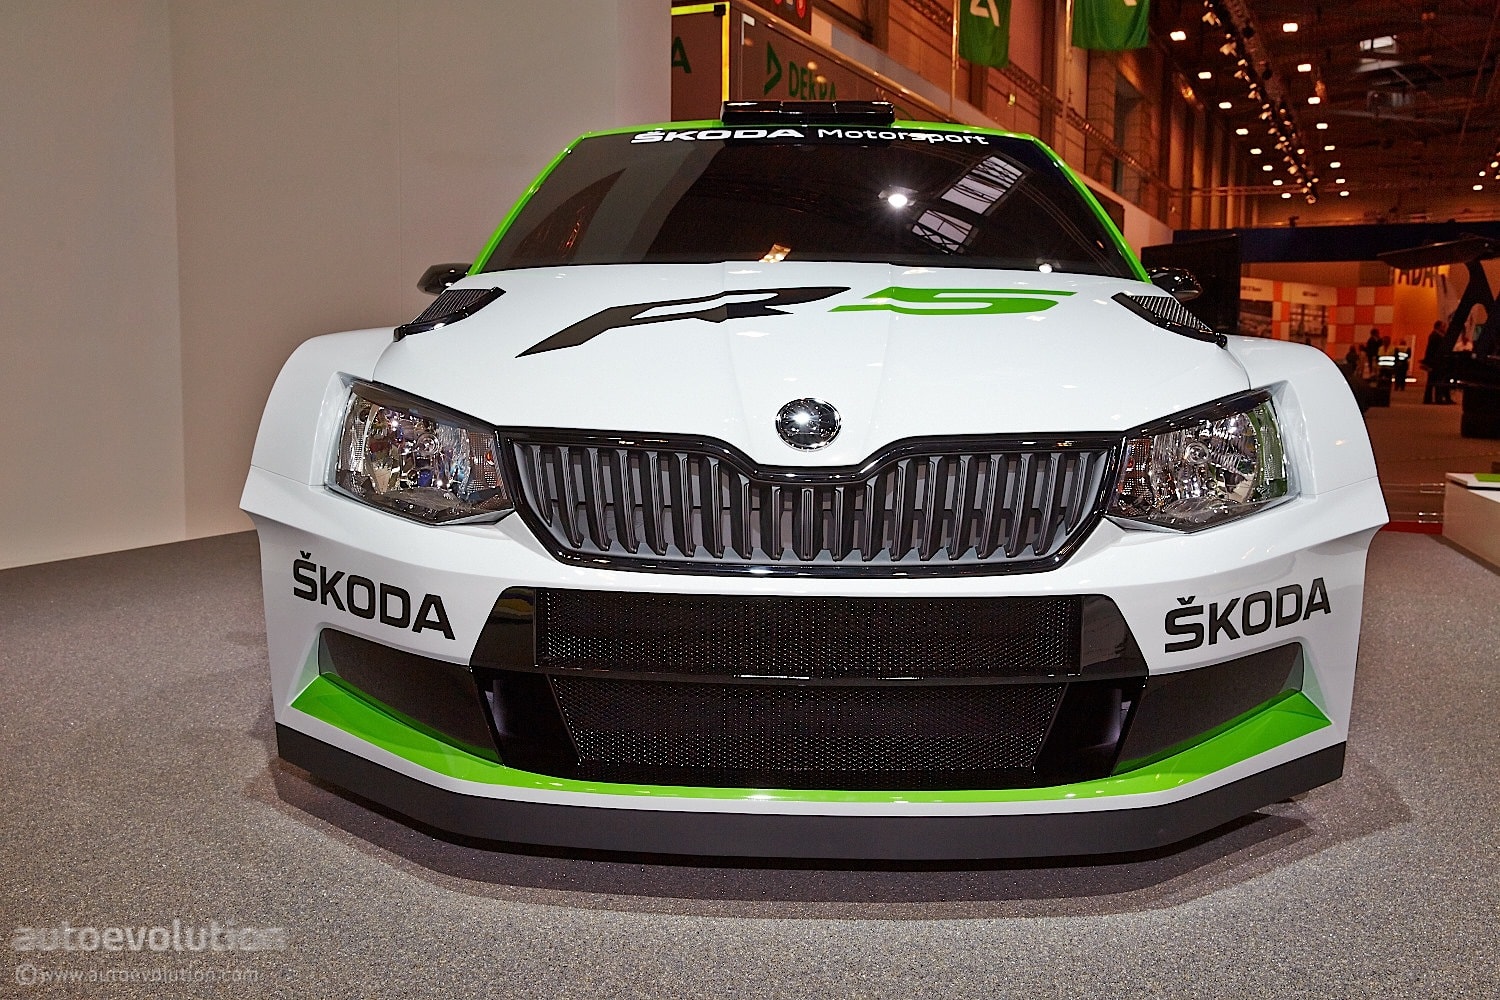 2015 Skoda Fabia R5 Races into Essen and the Rally World ...